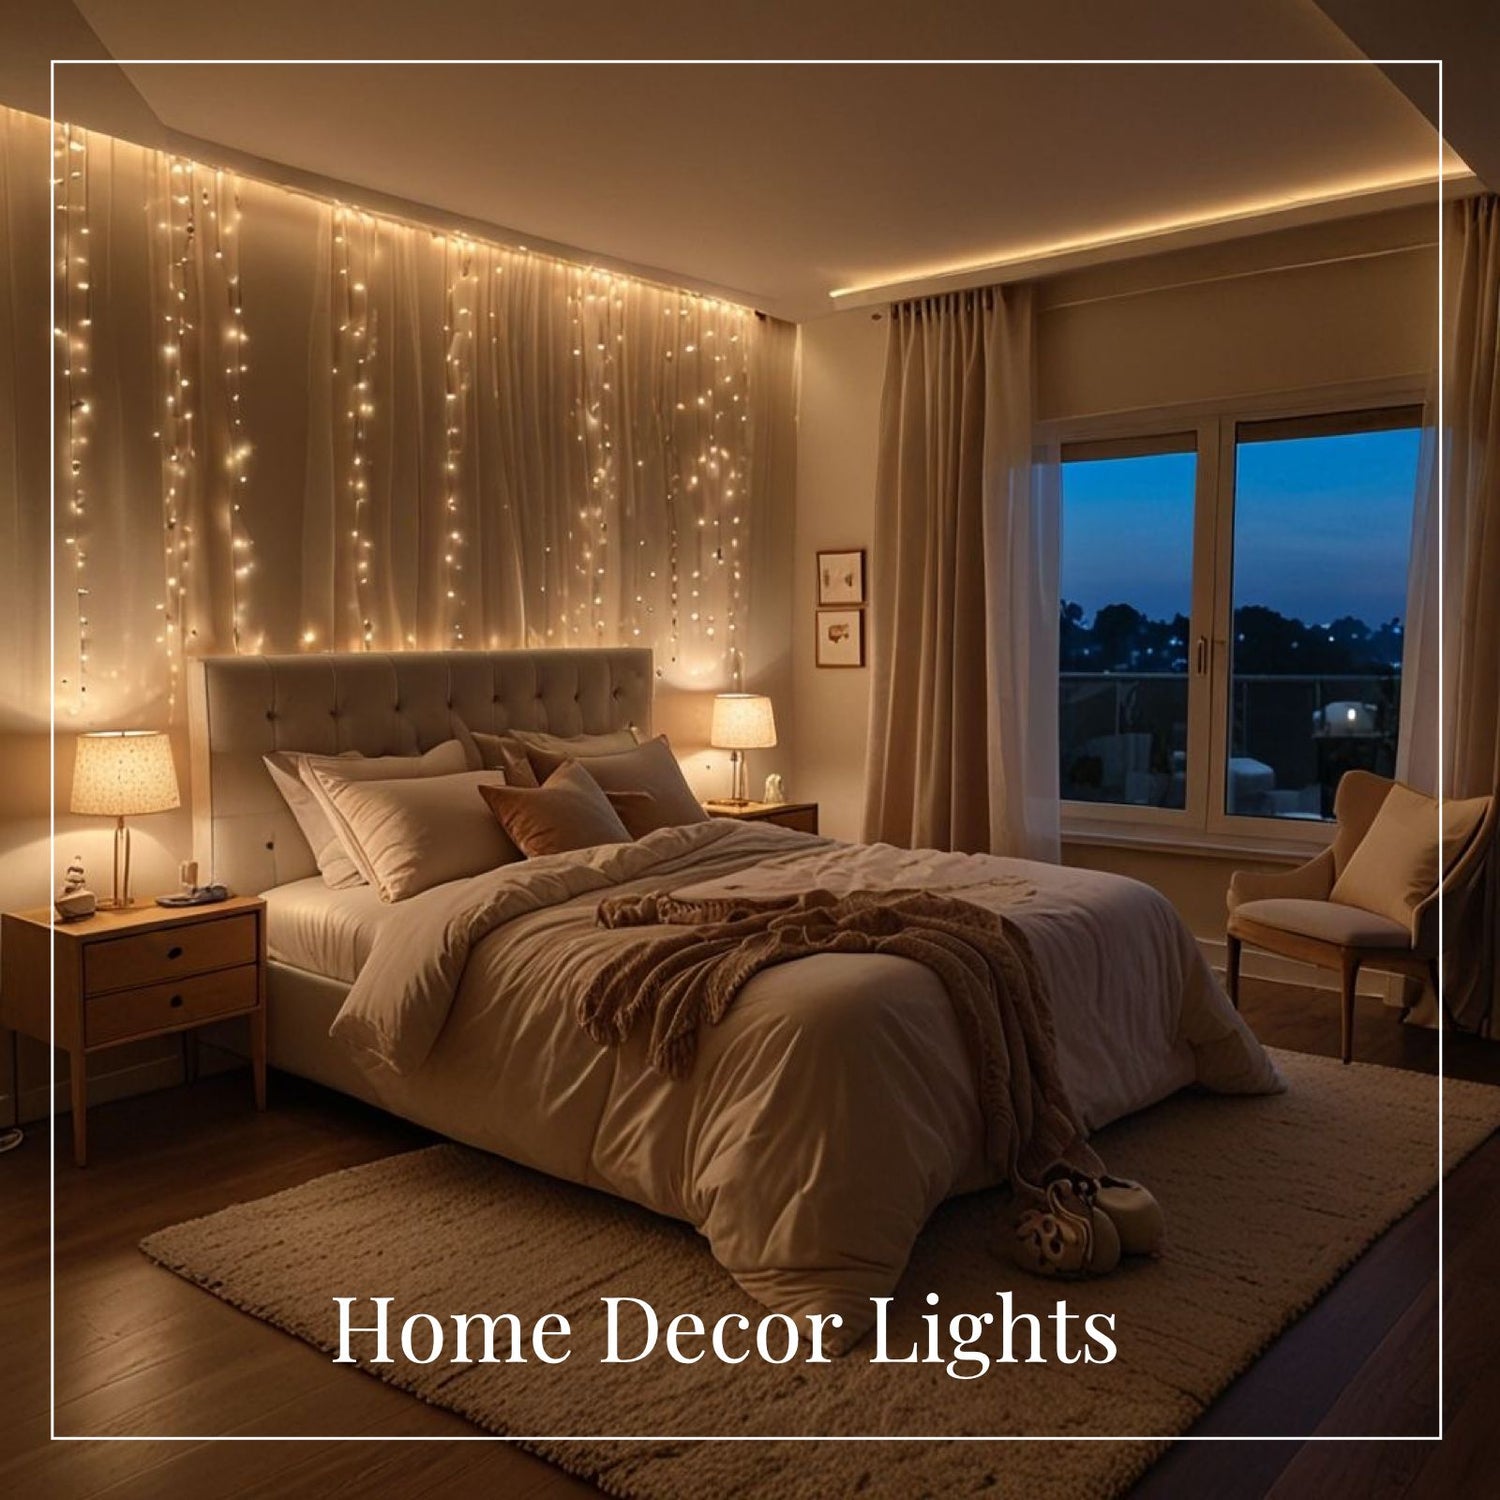 Home Decor Lights